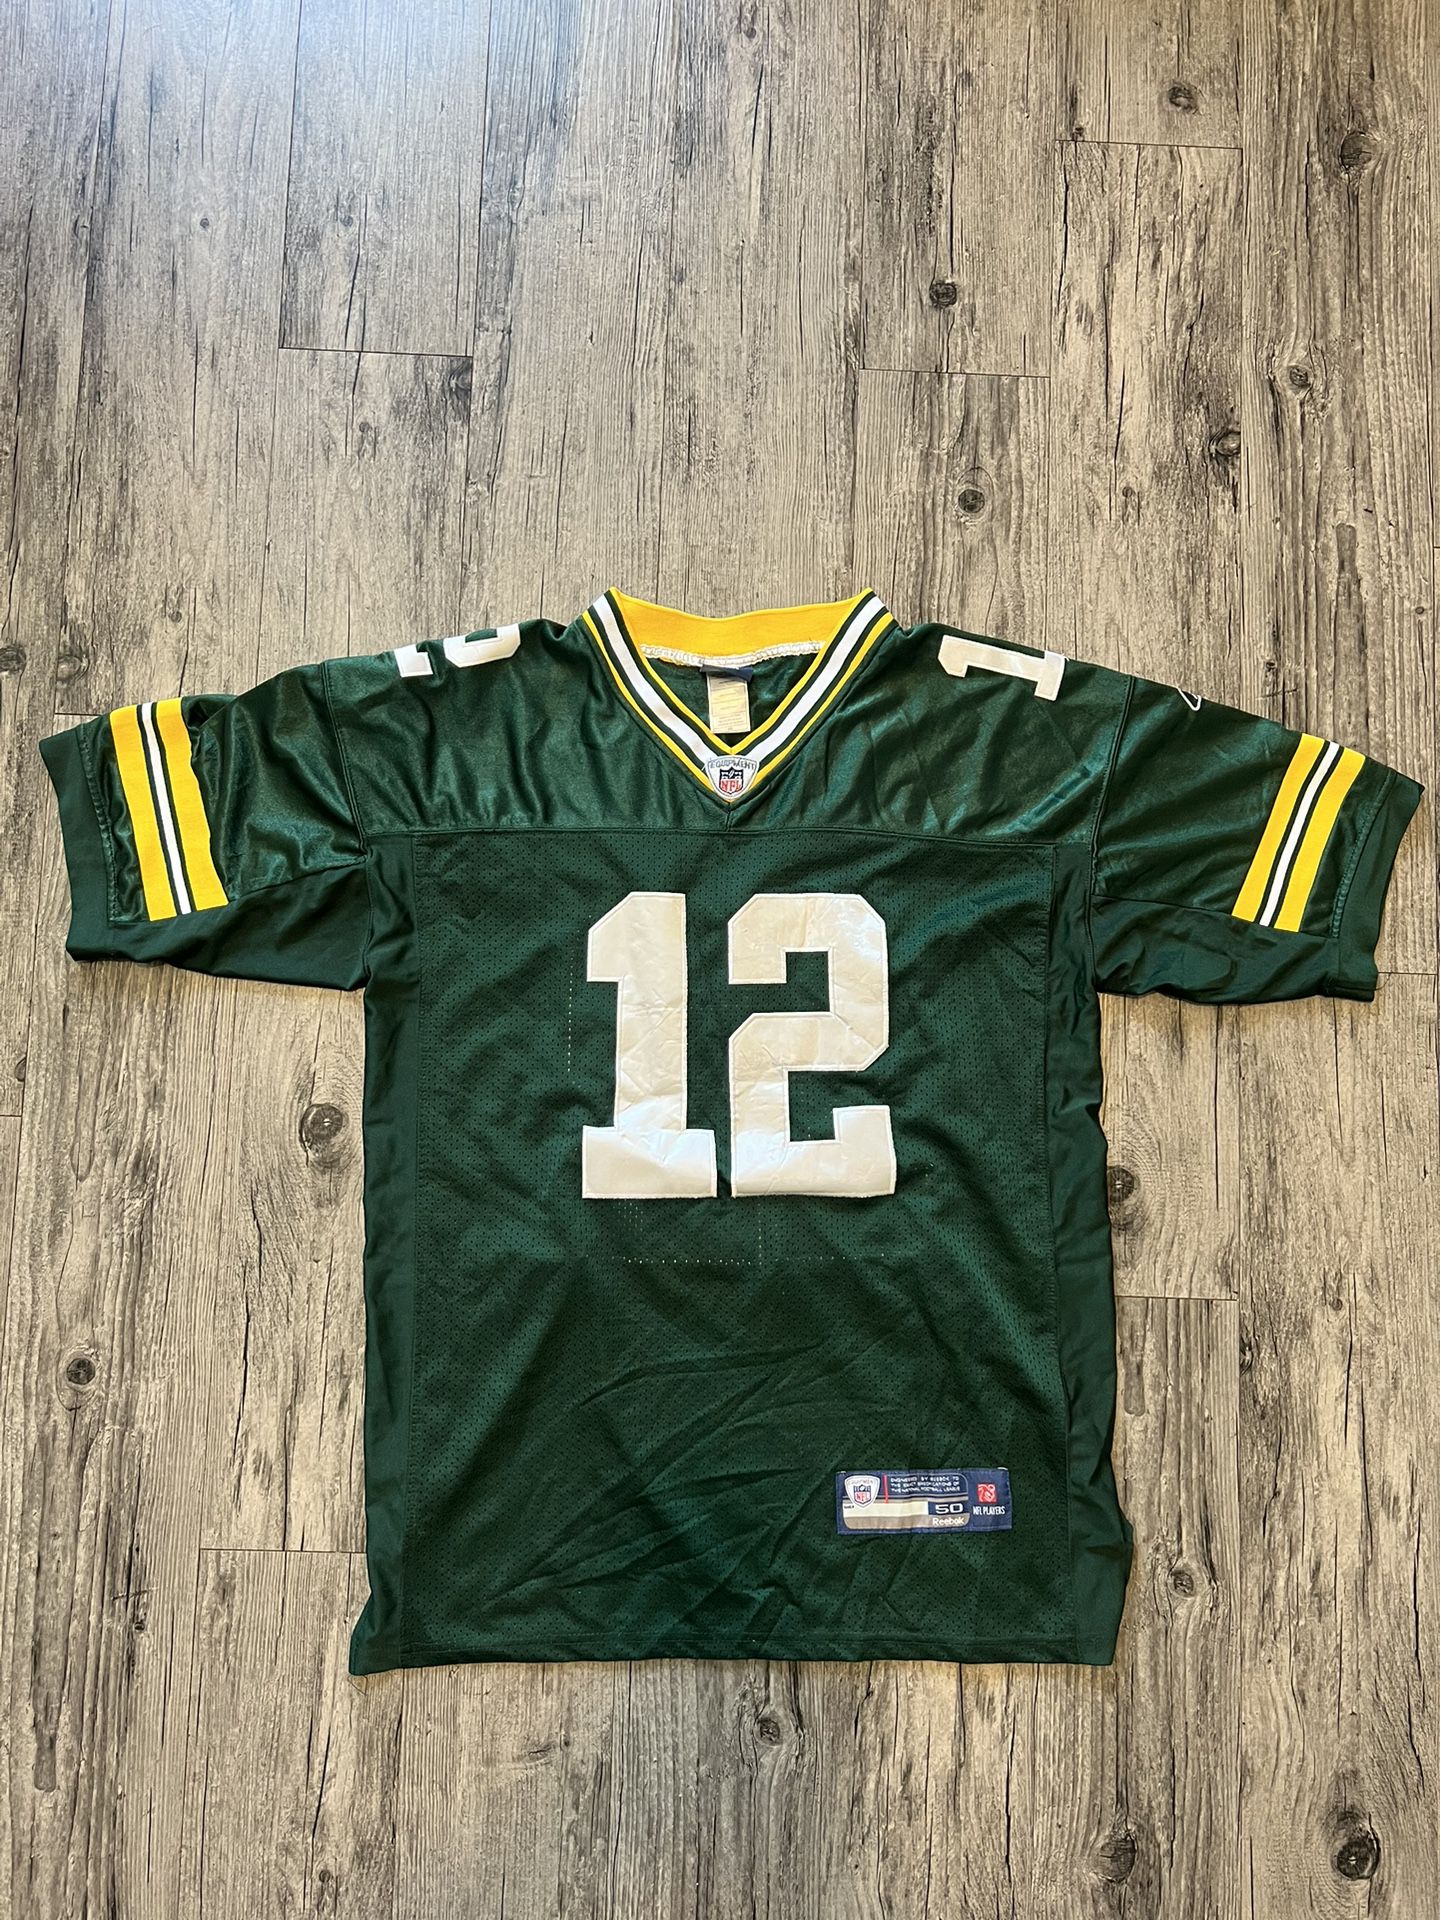 Reebok Green Bay Packers Aaron Rodgers #12 NFL Jersey